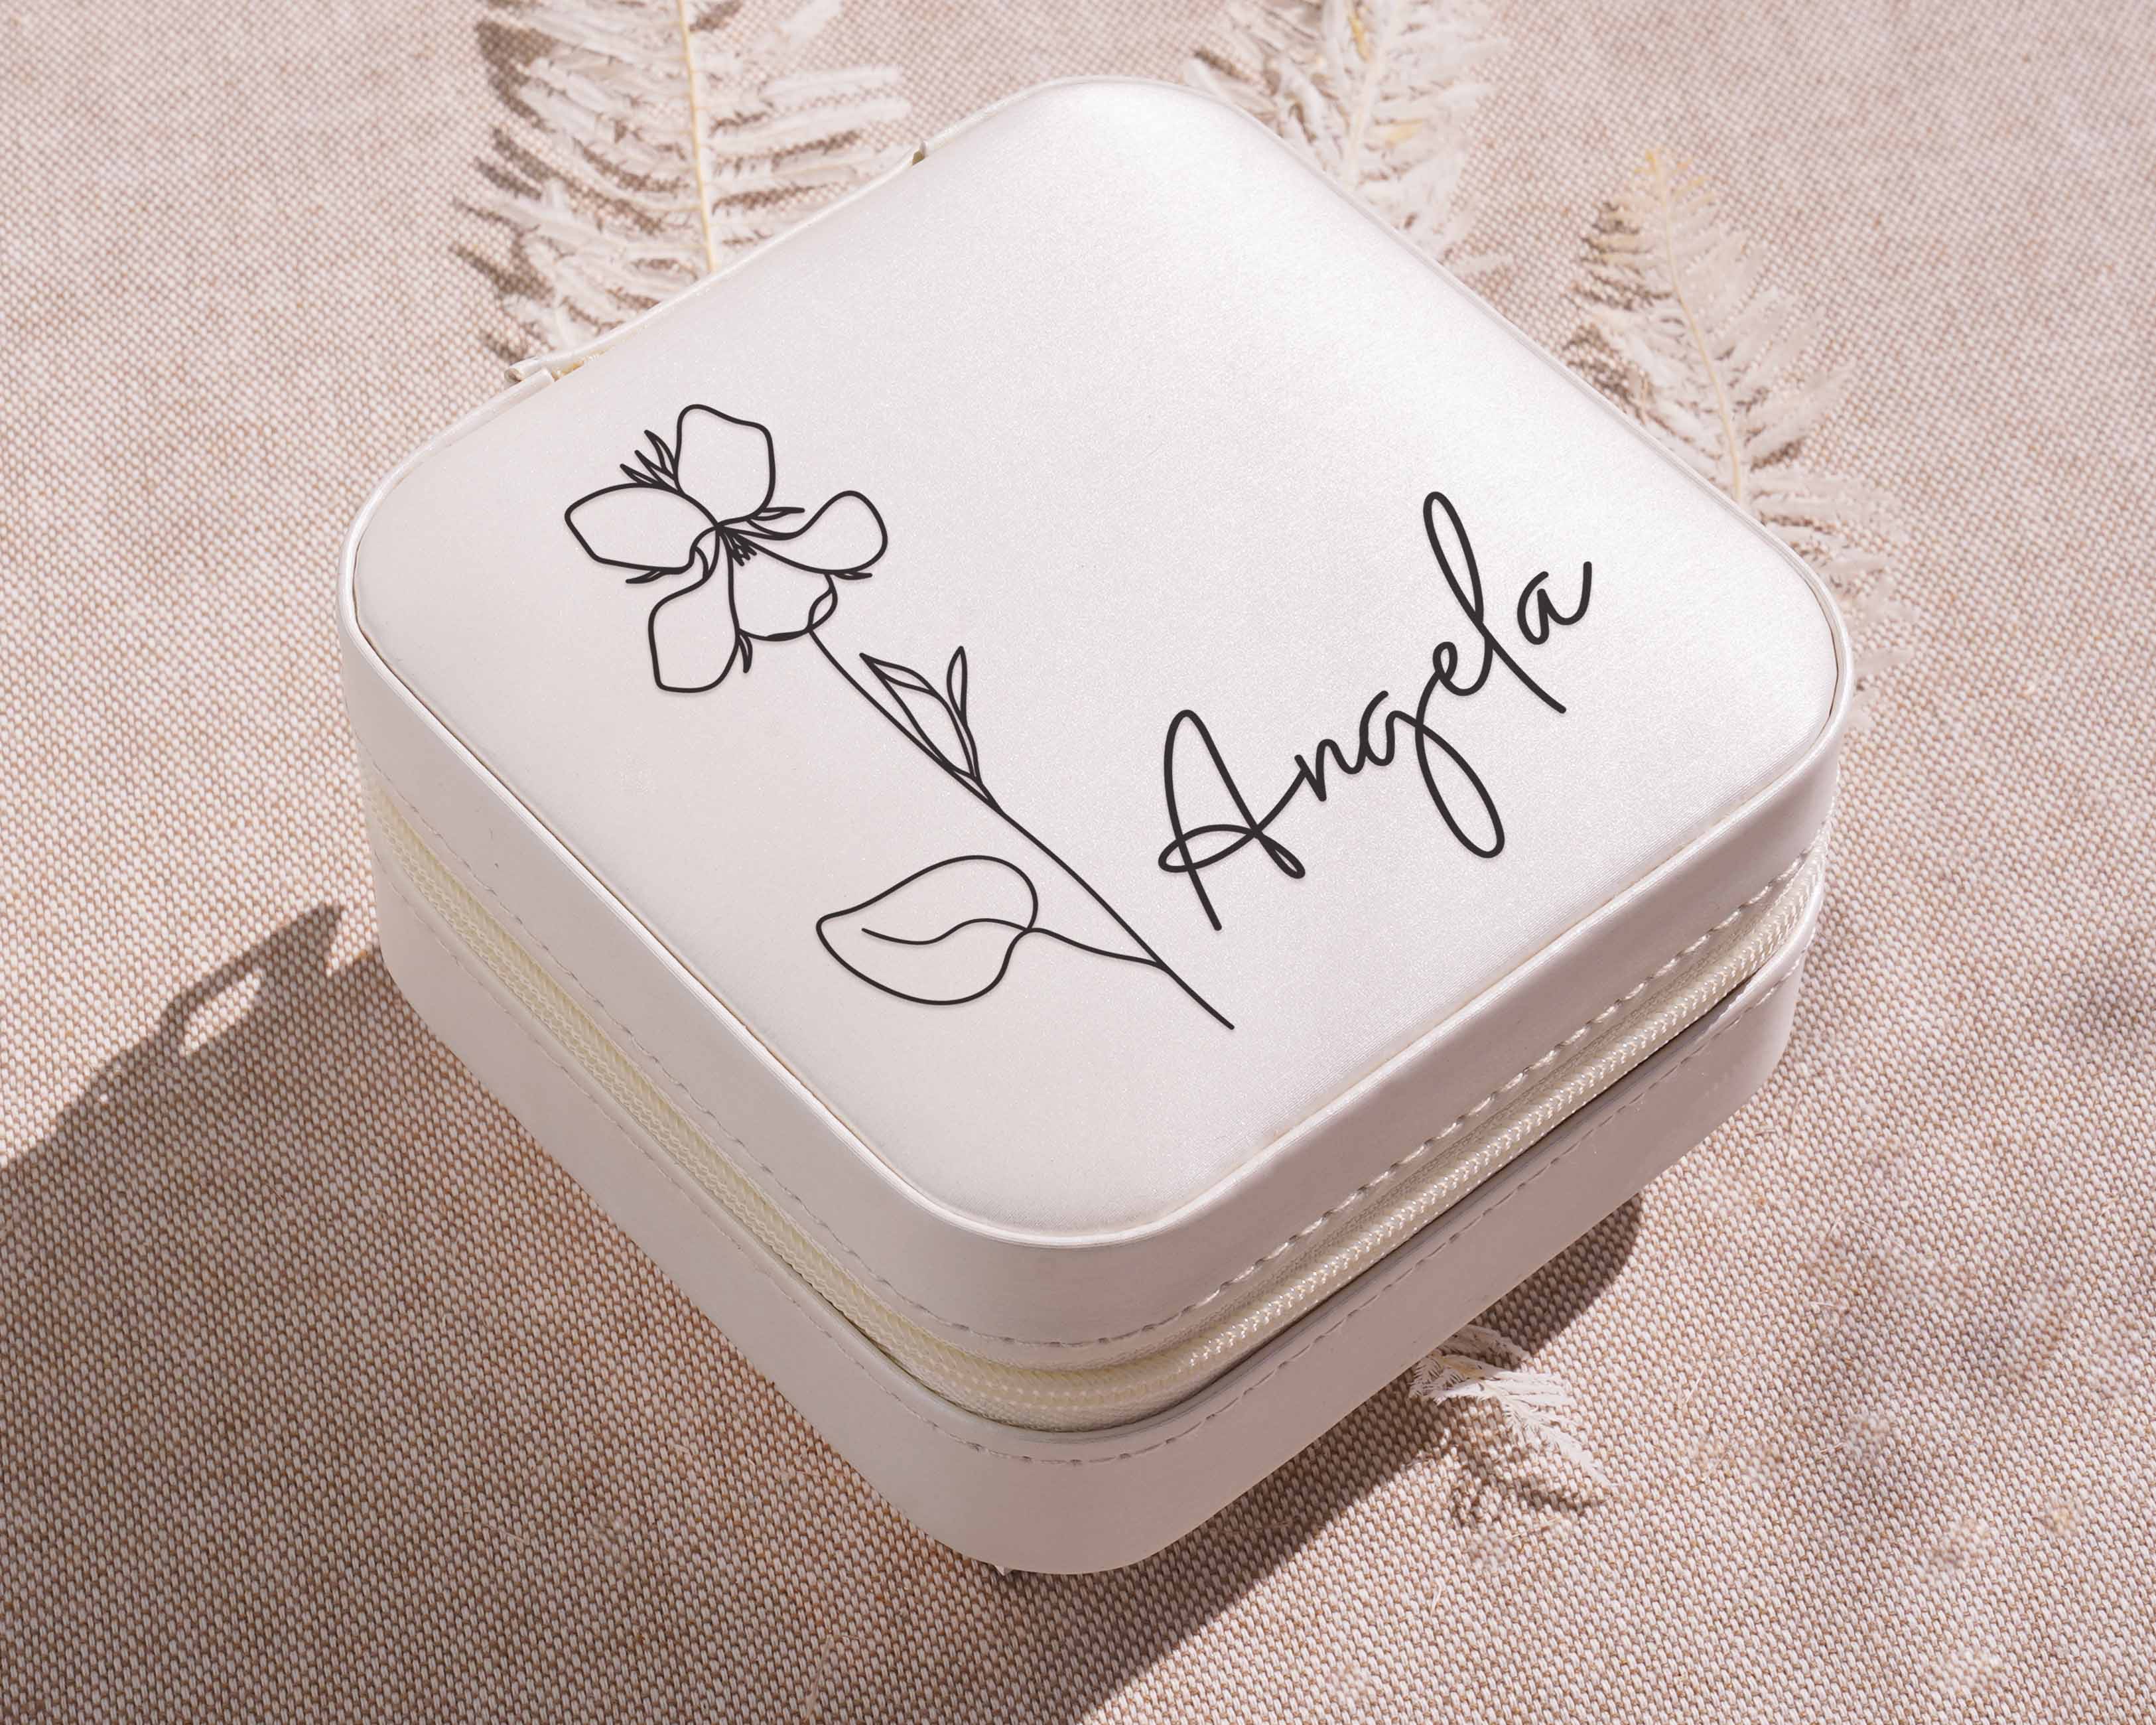 Personalized Jewelry Box - Custom White Bridesmaid Jewelry Box with birth flower and name